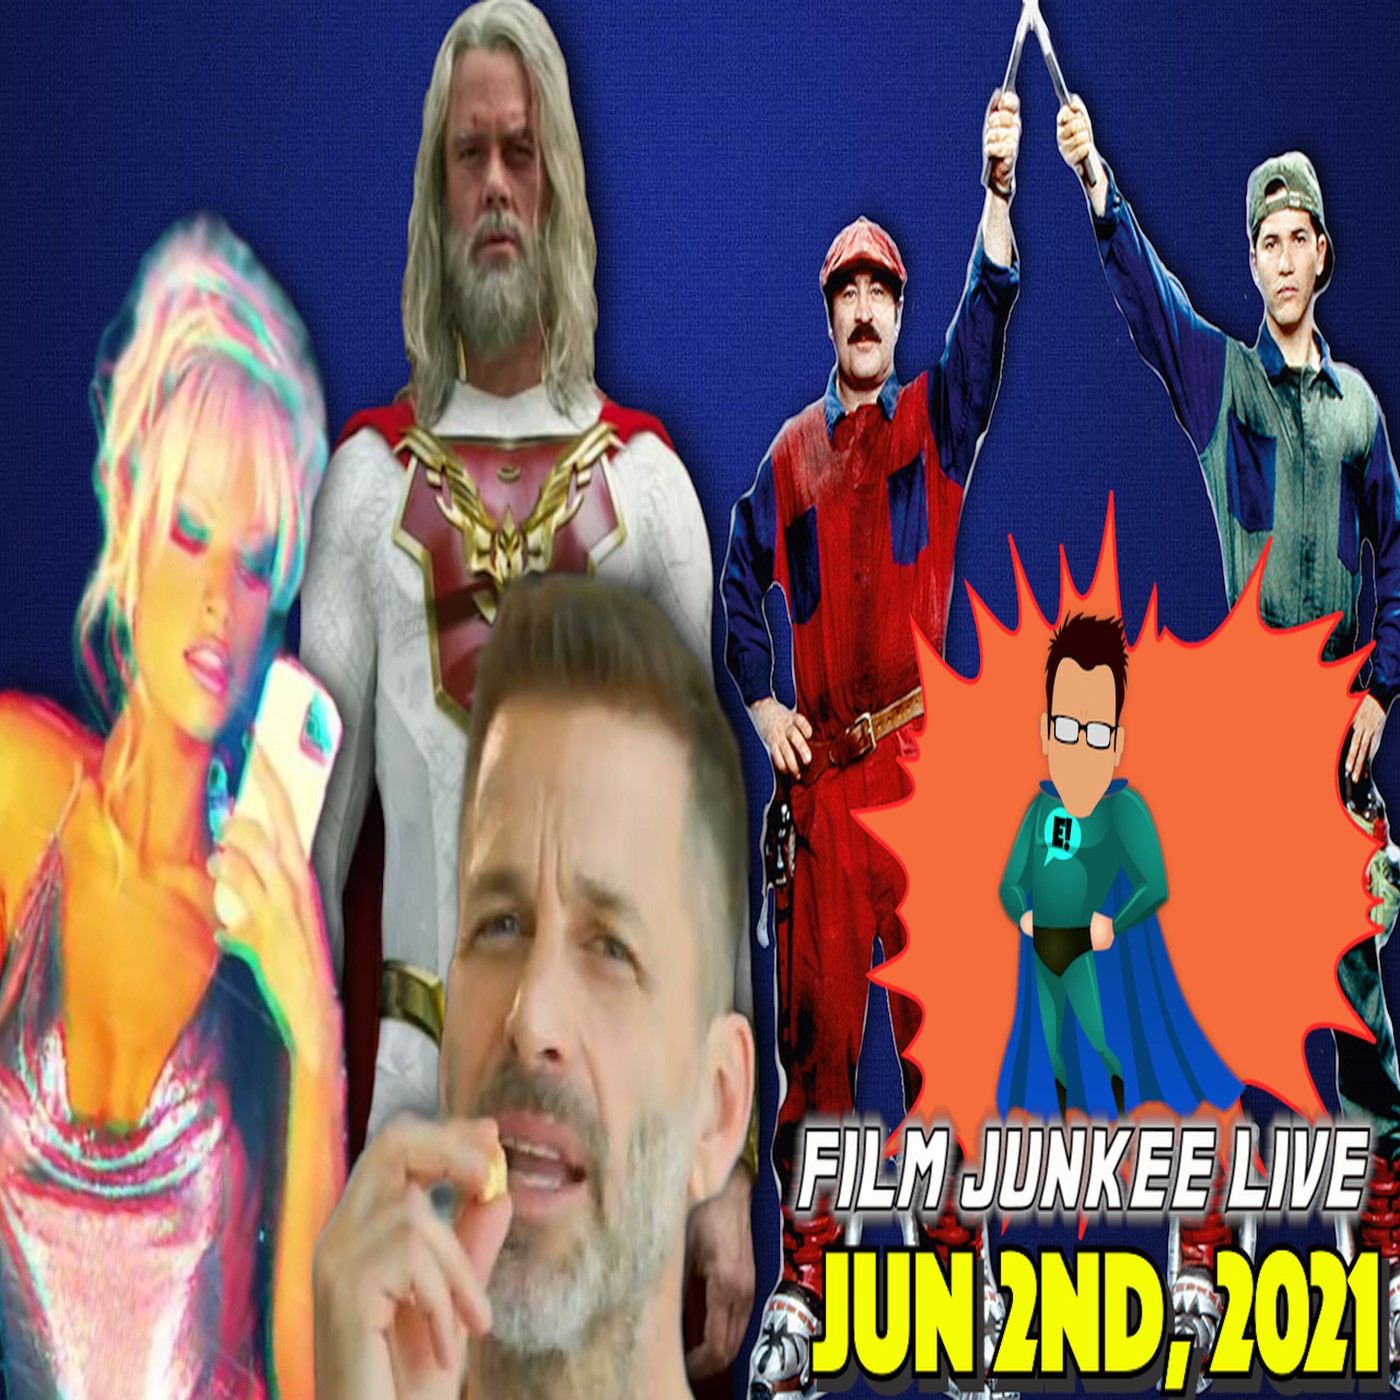 THE FILM JUNKEE